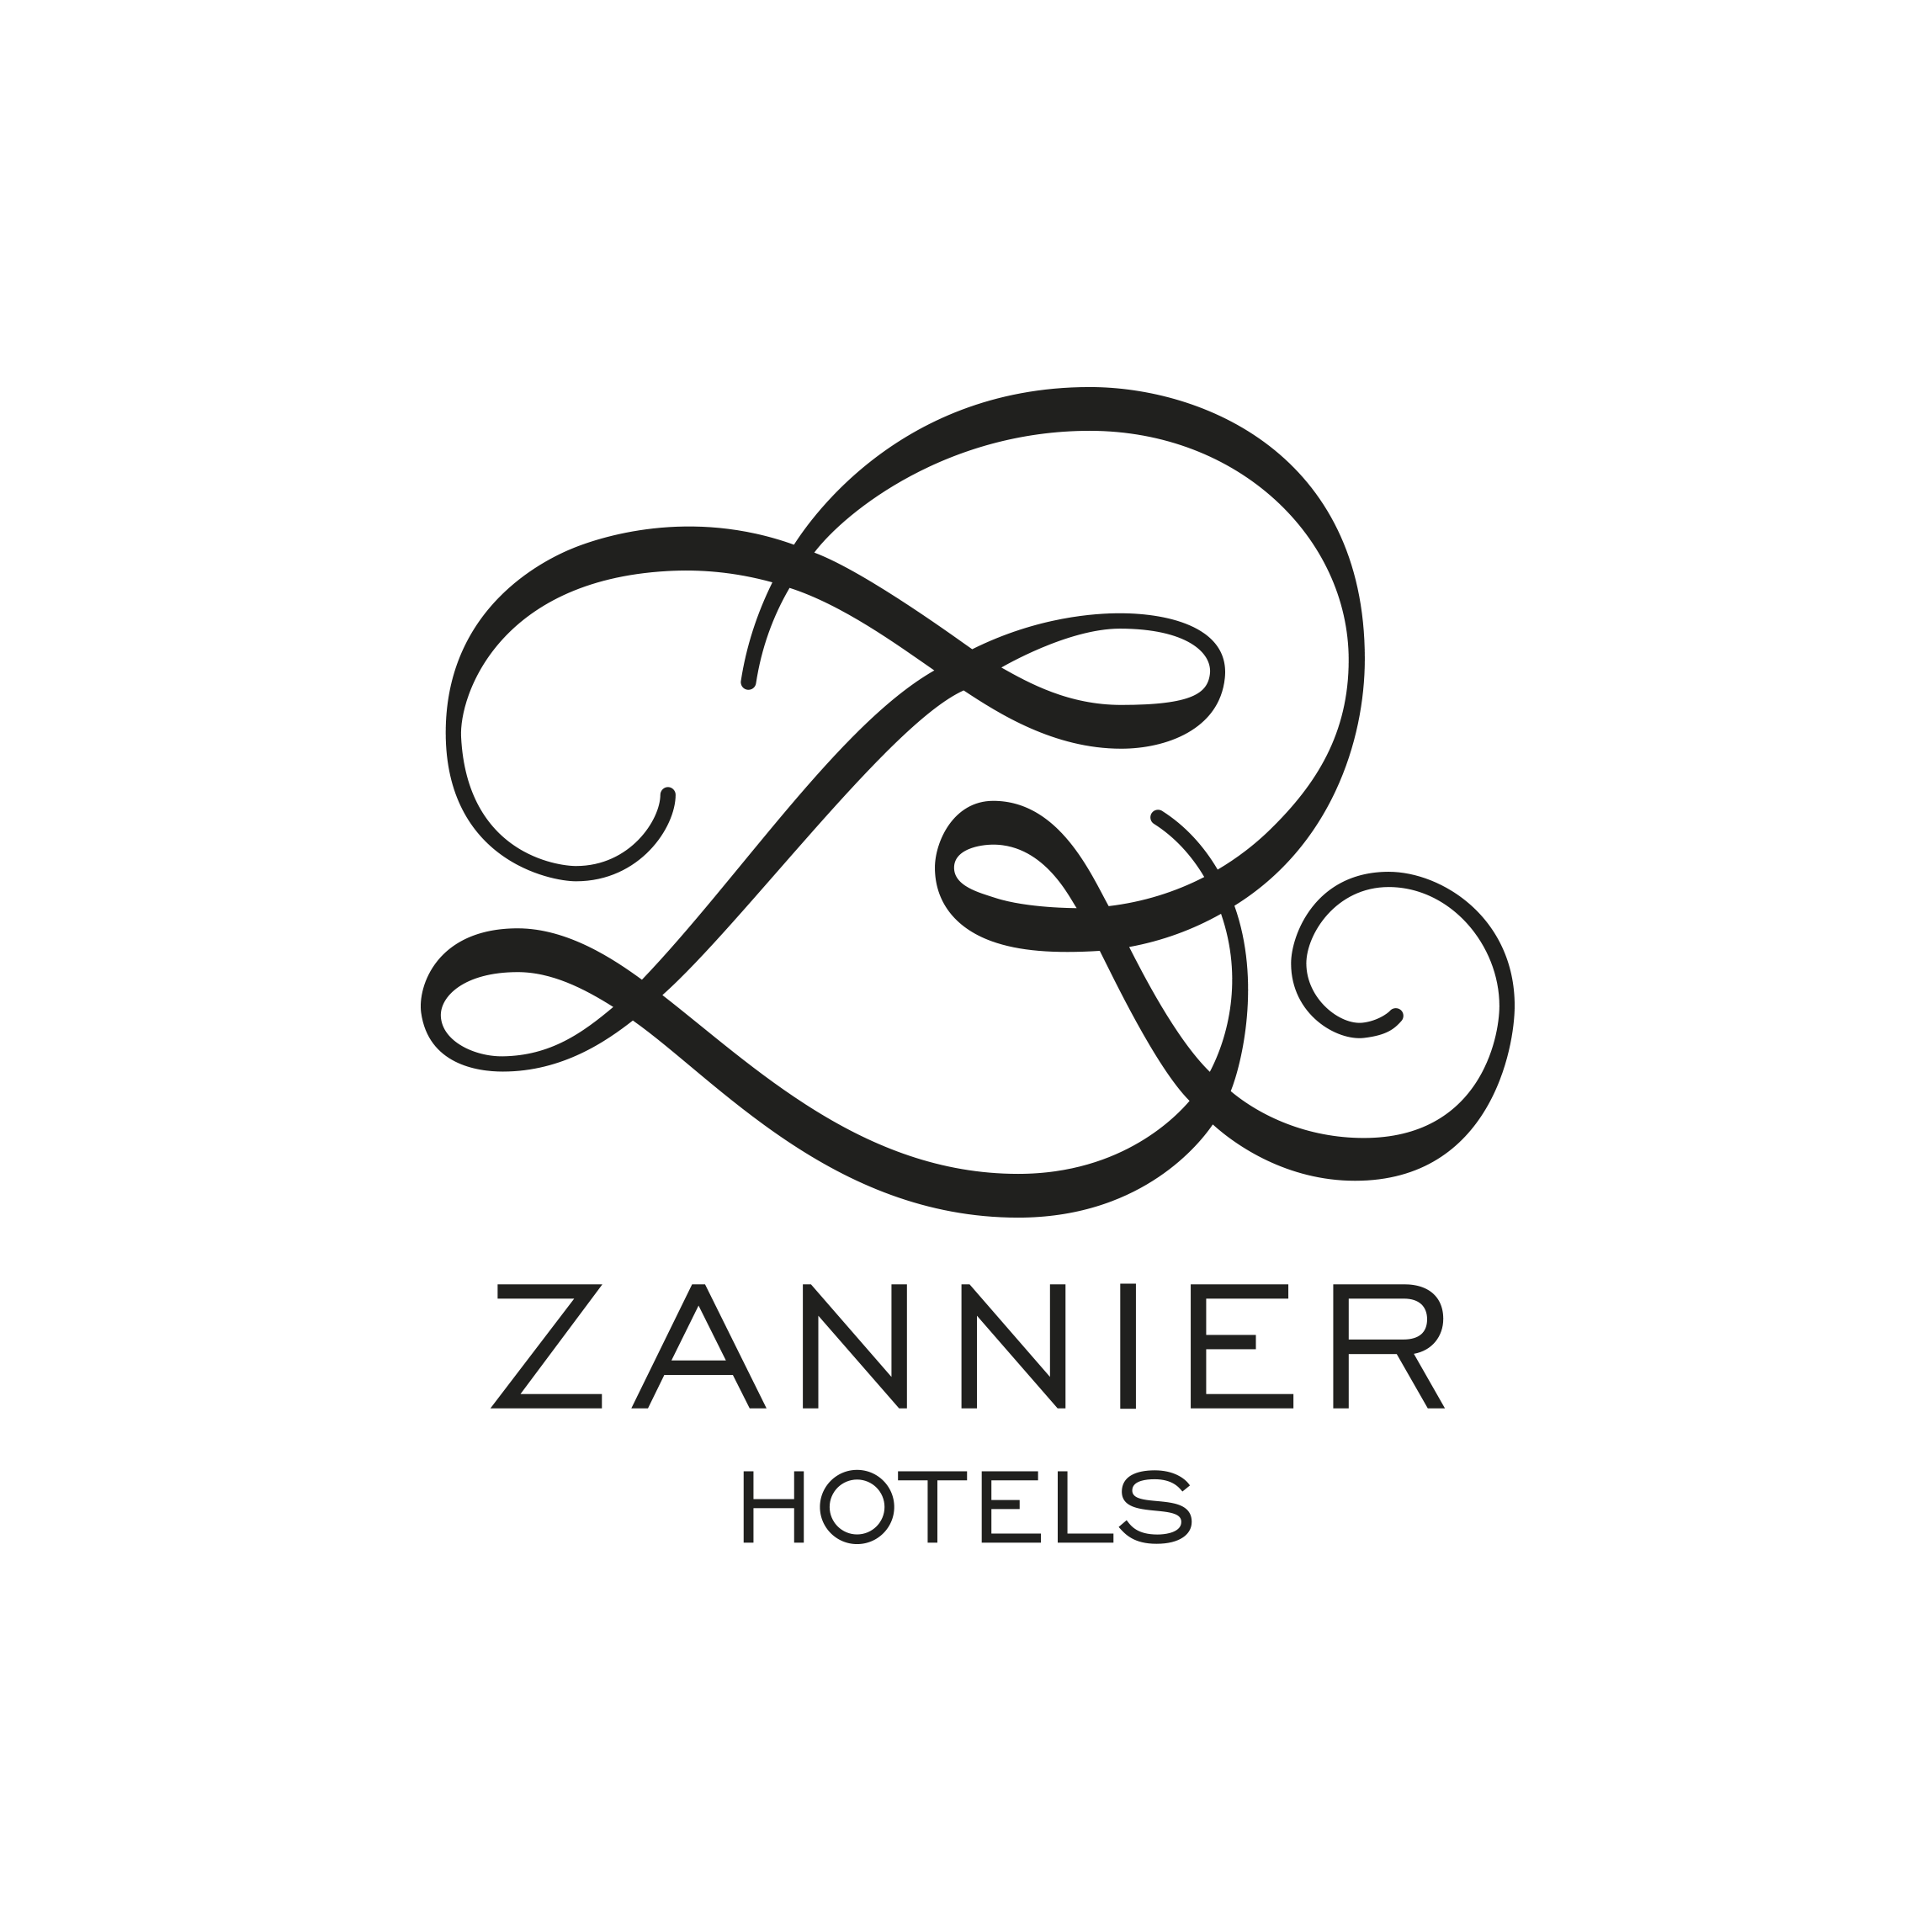 Zannier Hotels | Luxury Hotels, Resorts and Safaris